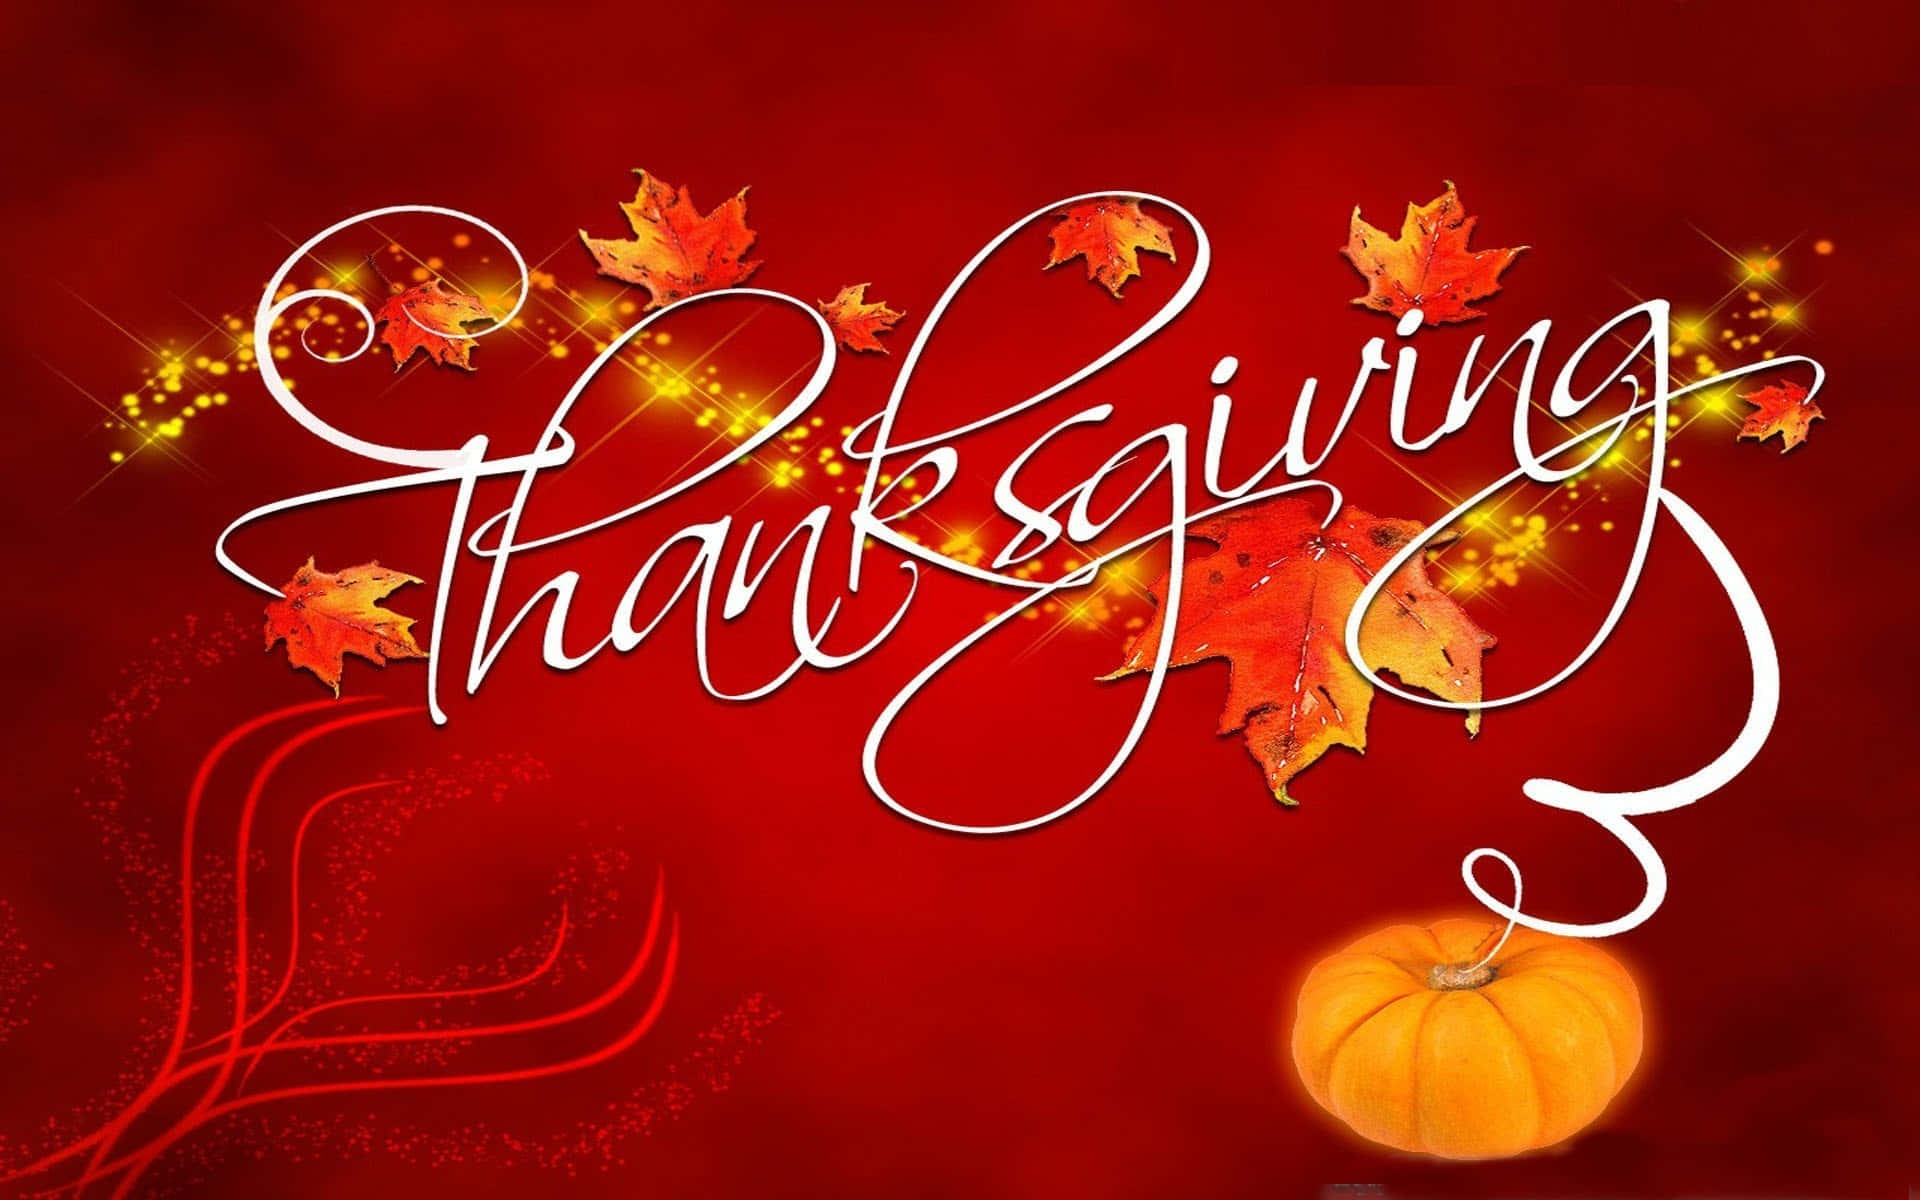 Celebrate Thanksgiving with this Happy Thanksgiving Desktop wallpaper Wallpaper